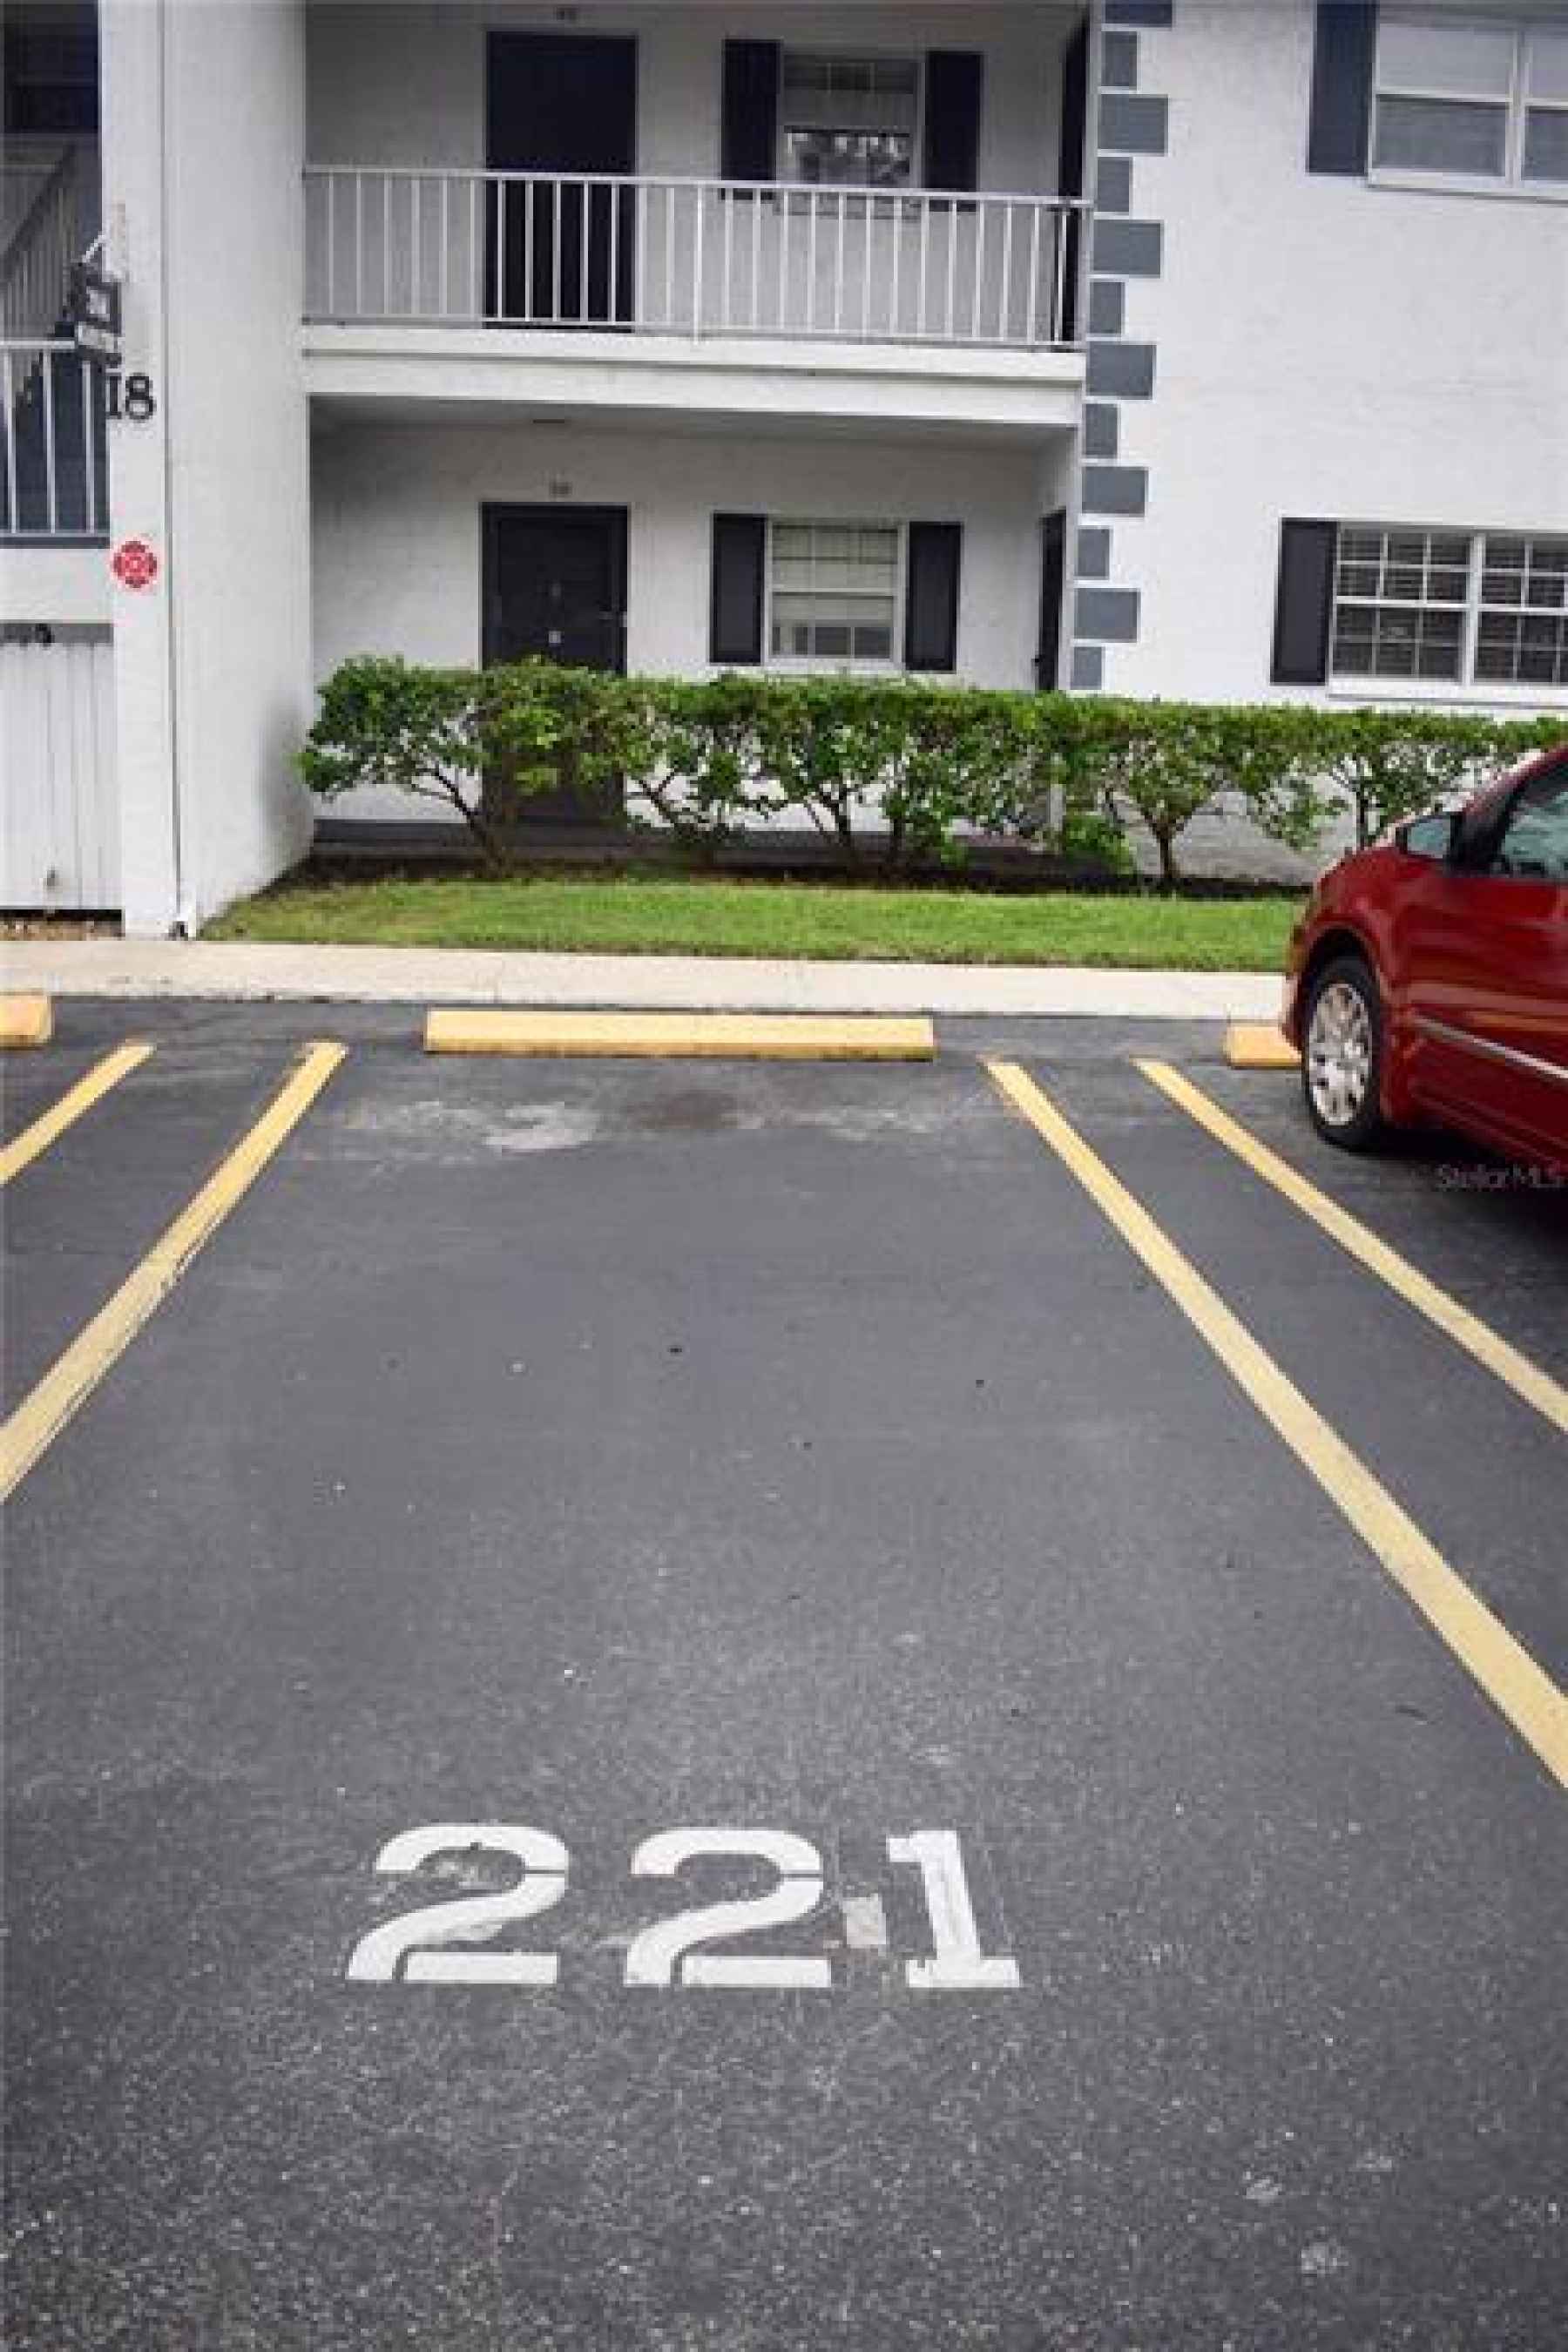 Dedicated parking